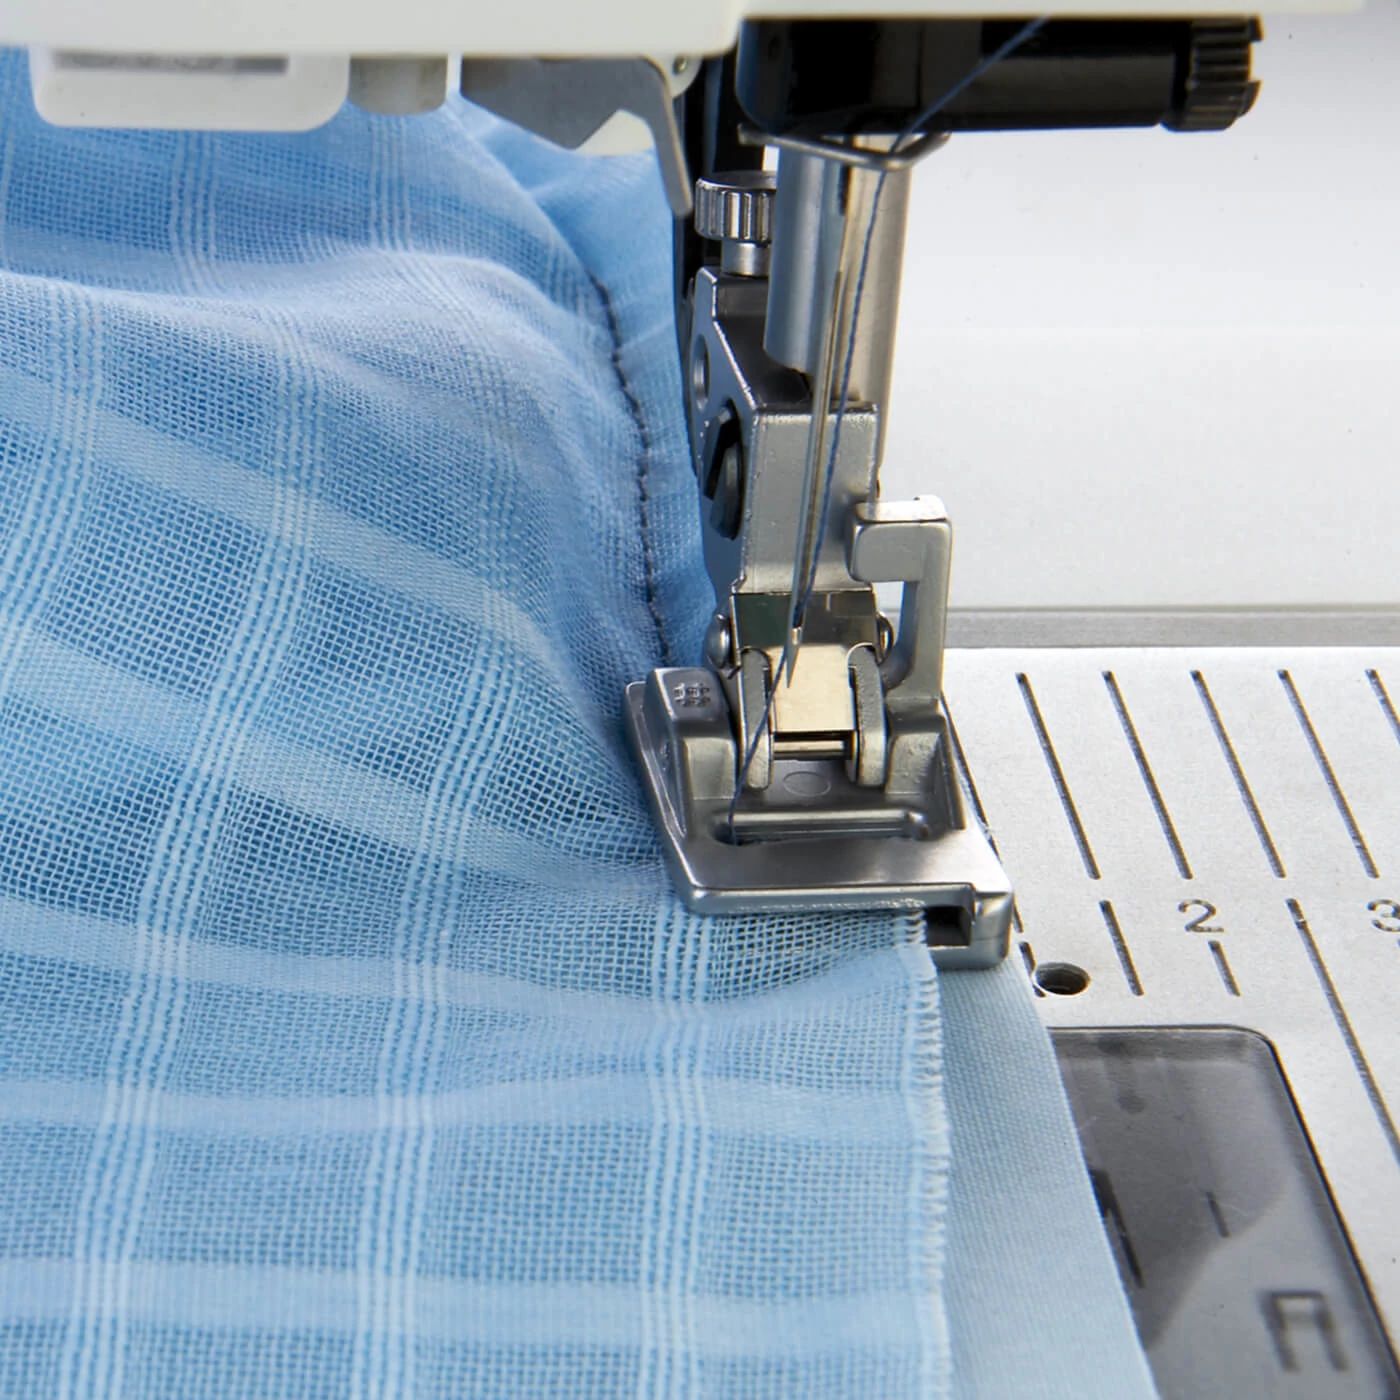 Shop PFAFF custom sewing machine bags